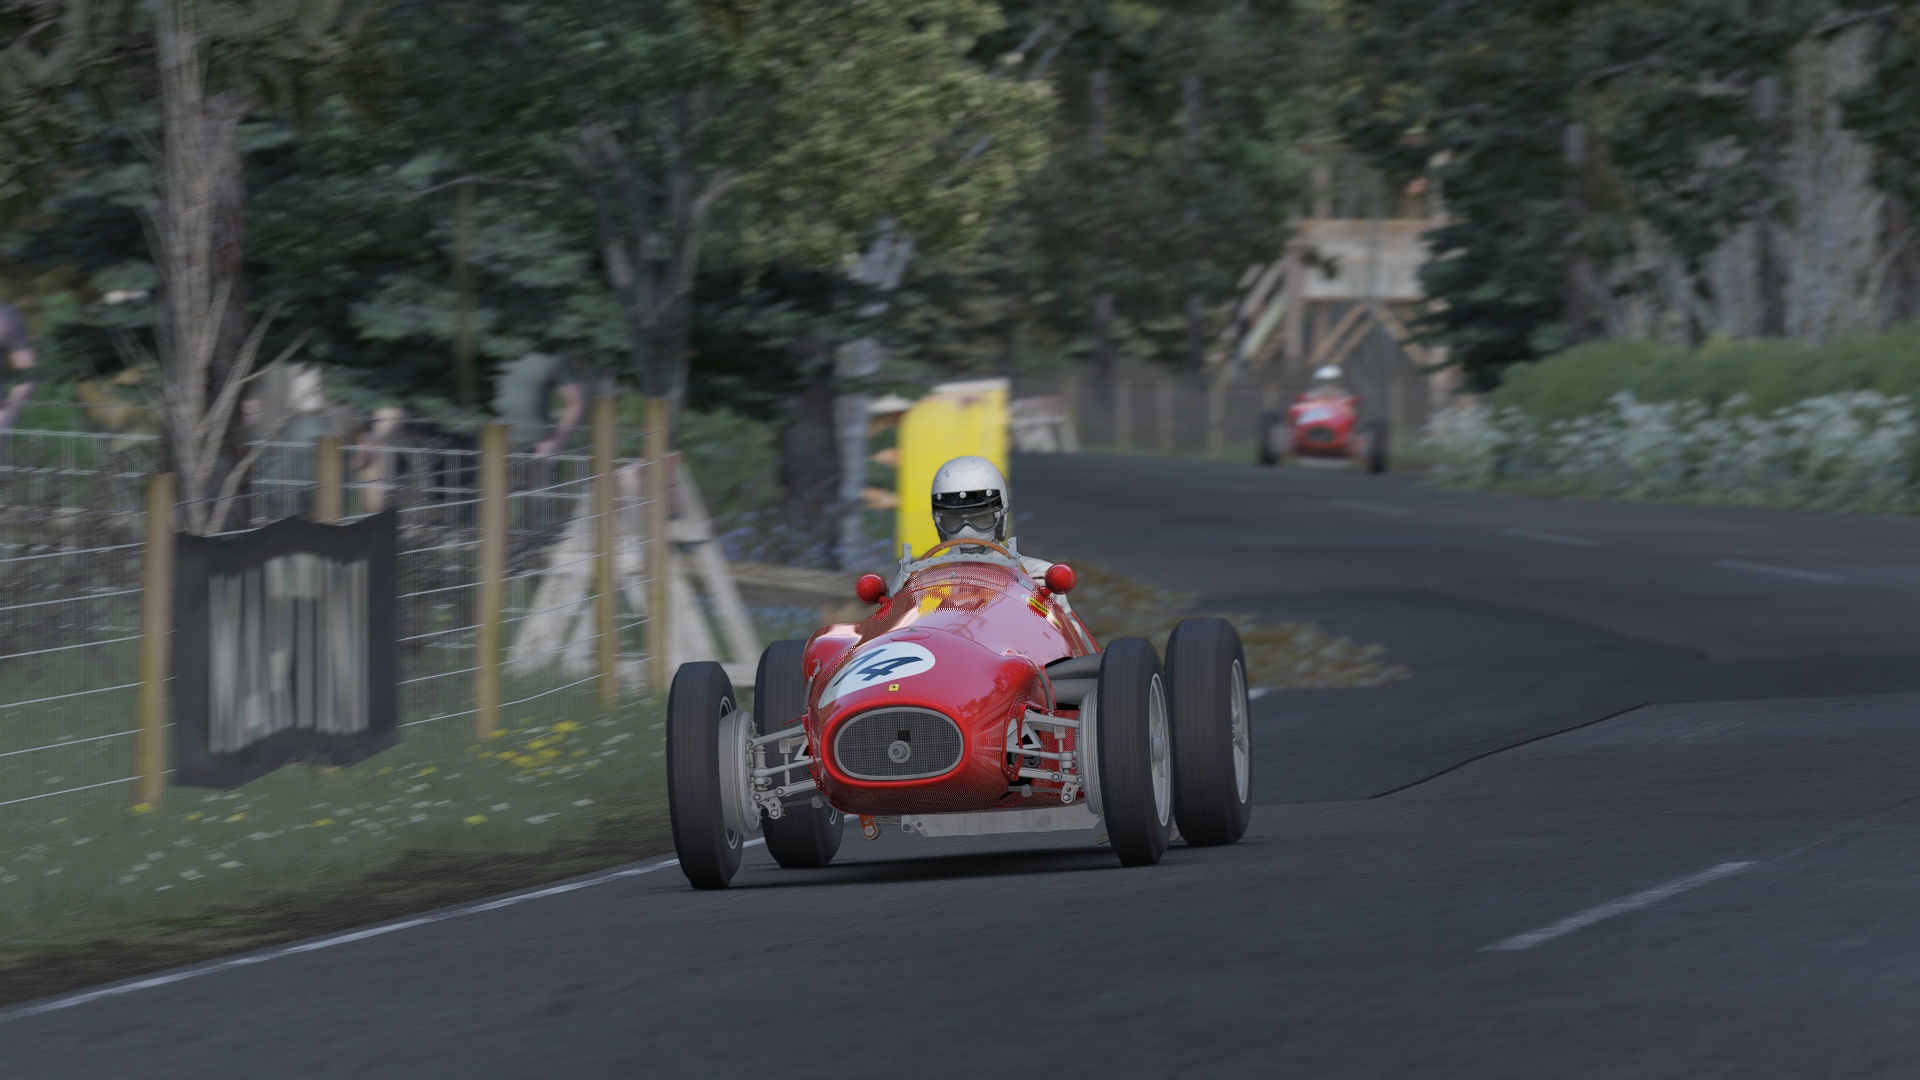 Bremgarten Grand Prix 1952 in Assetto Corsa.jpg